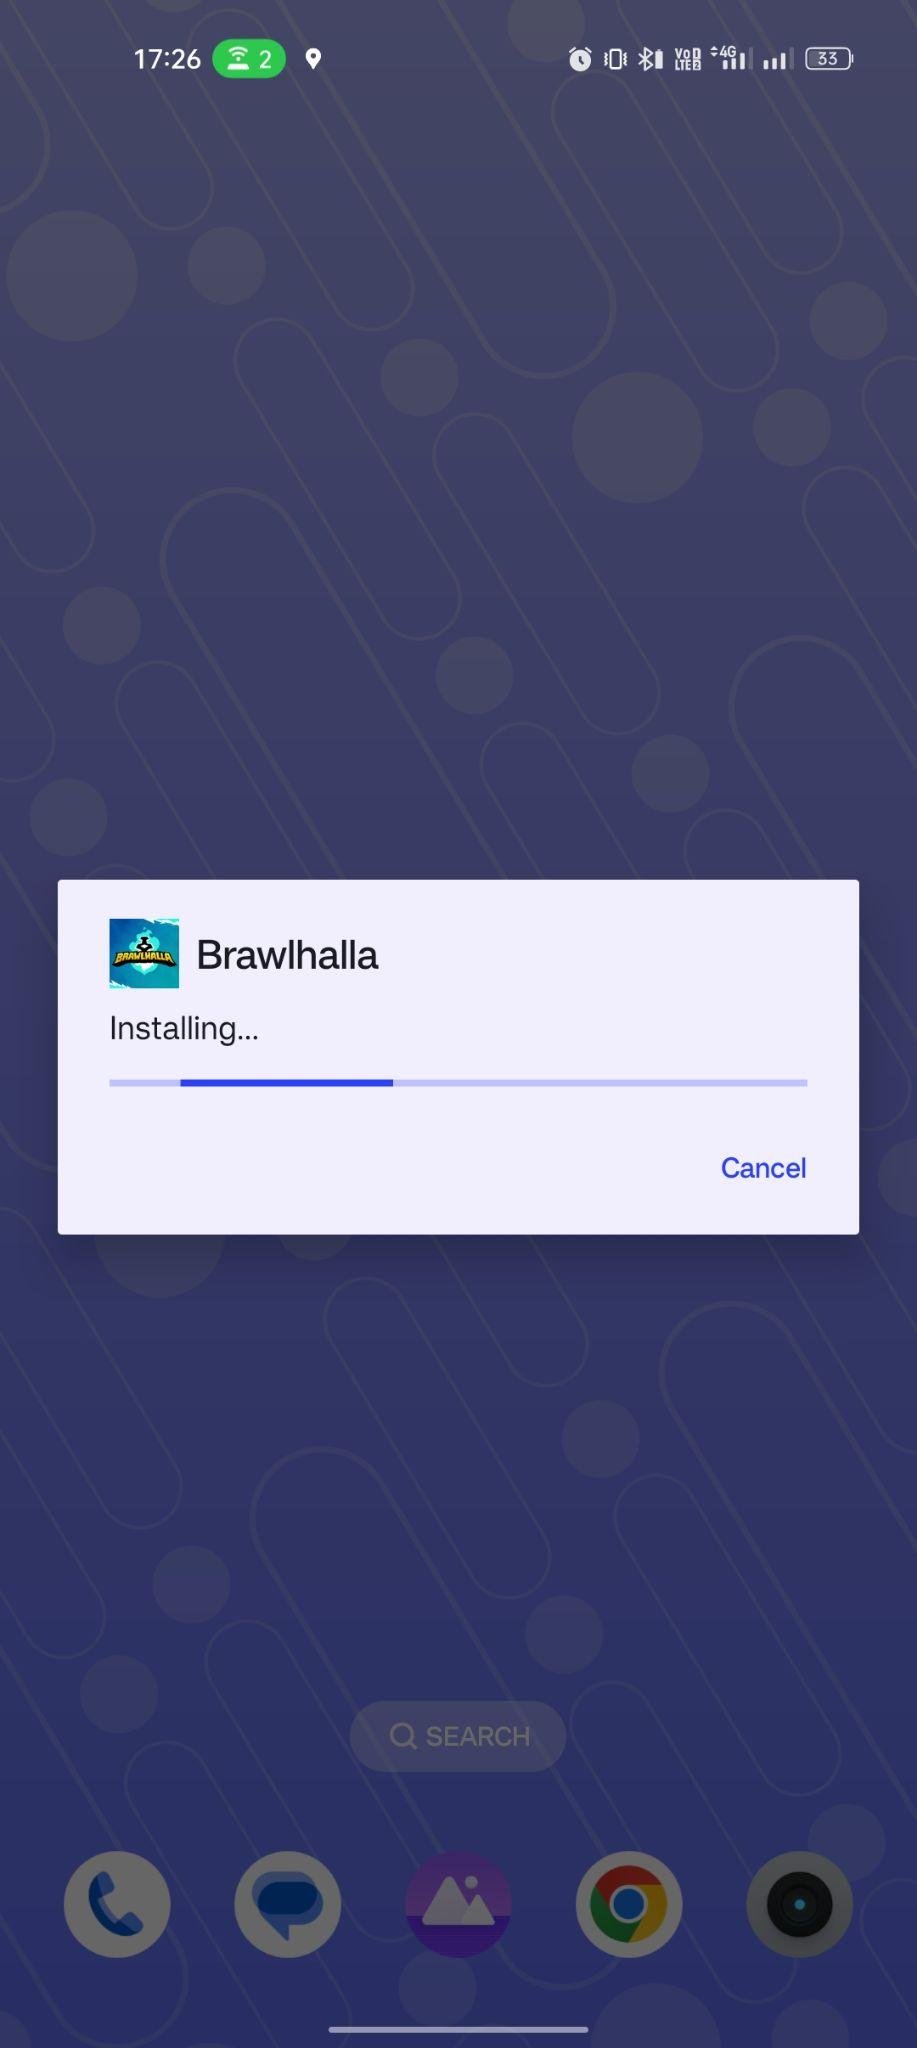 Brawhalla apk installing